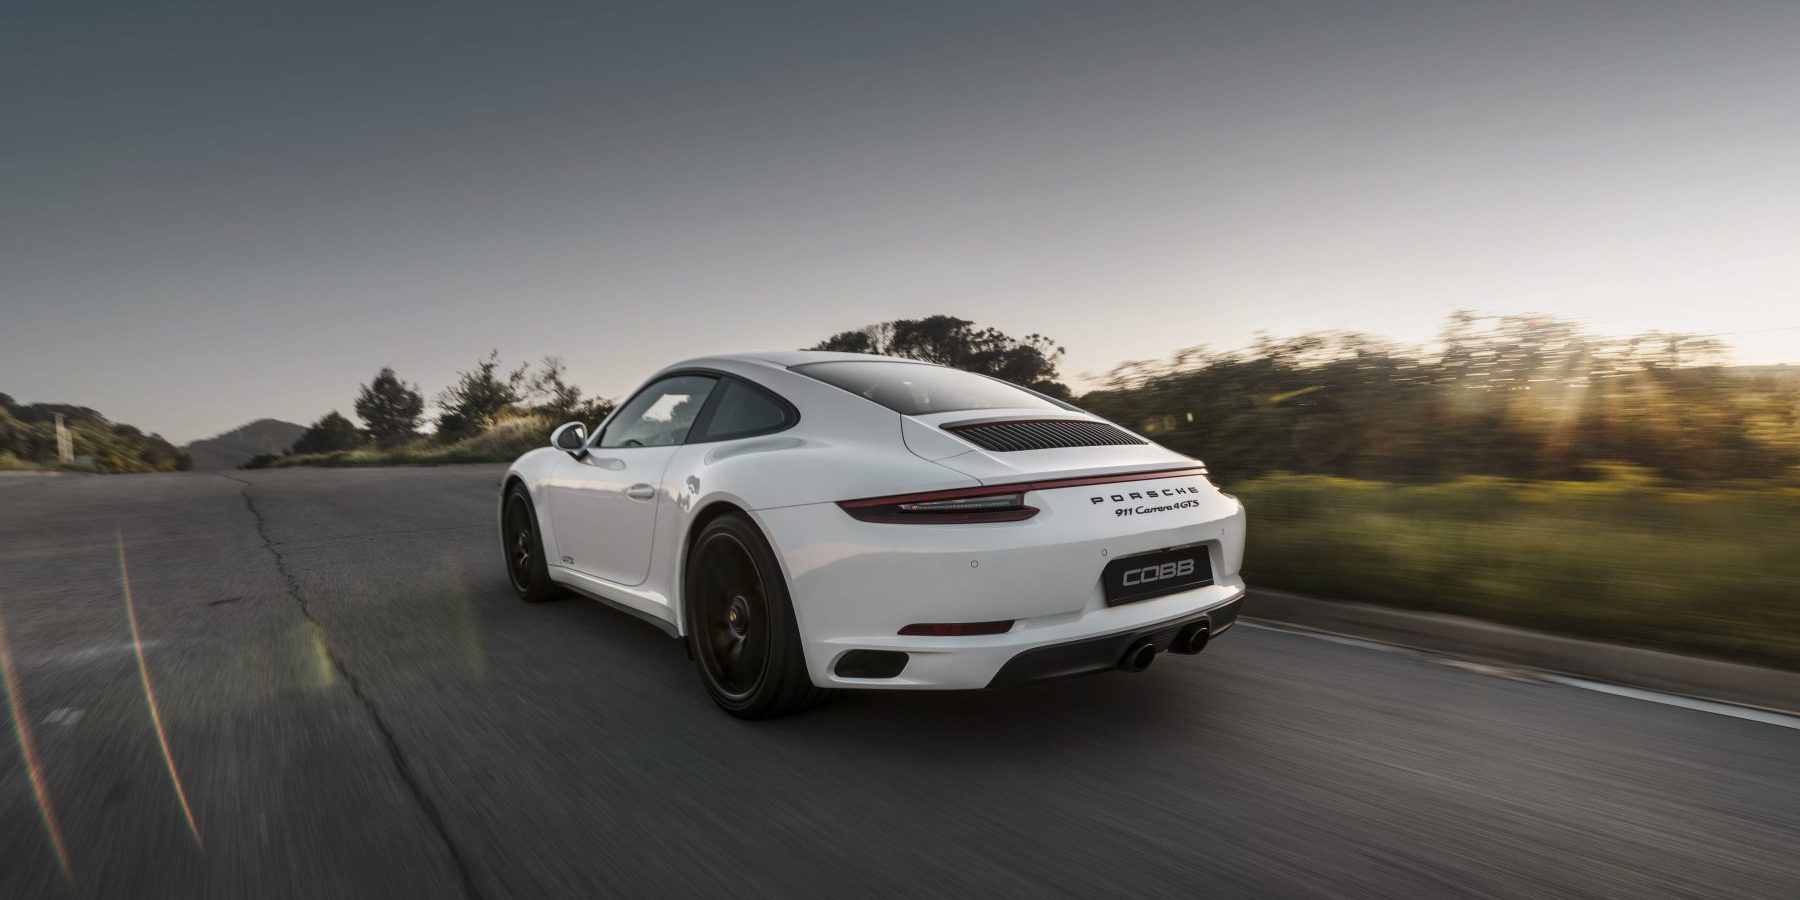 Porsche_911_991.2 Carrera 4 GTS_Rodri Yufe_In motion 1_white (1)